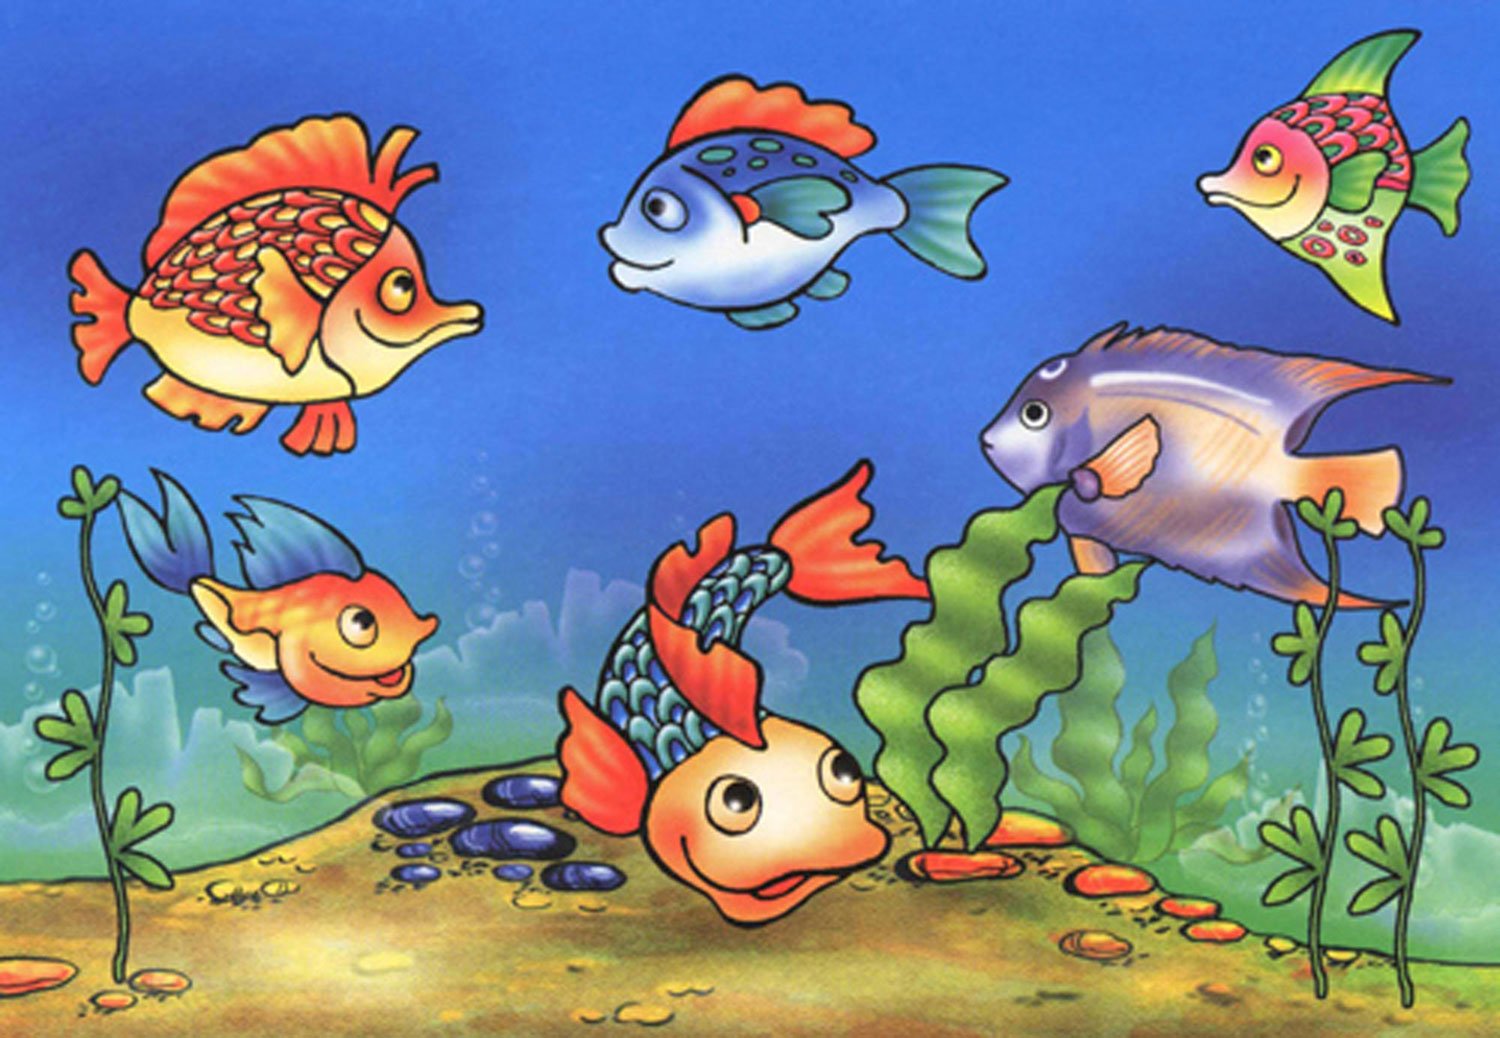 Рисования рыбки плавают в аквариуме. Аквариум с рыбками для детей. Рыбка рисунок. Аквариум с рыбками рисунок. Рыбы для детей дошкольного возраста.